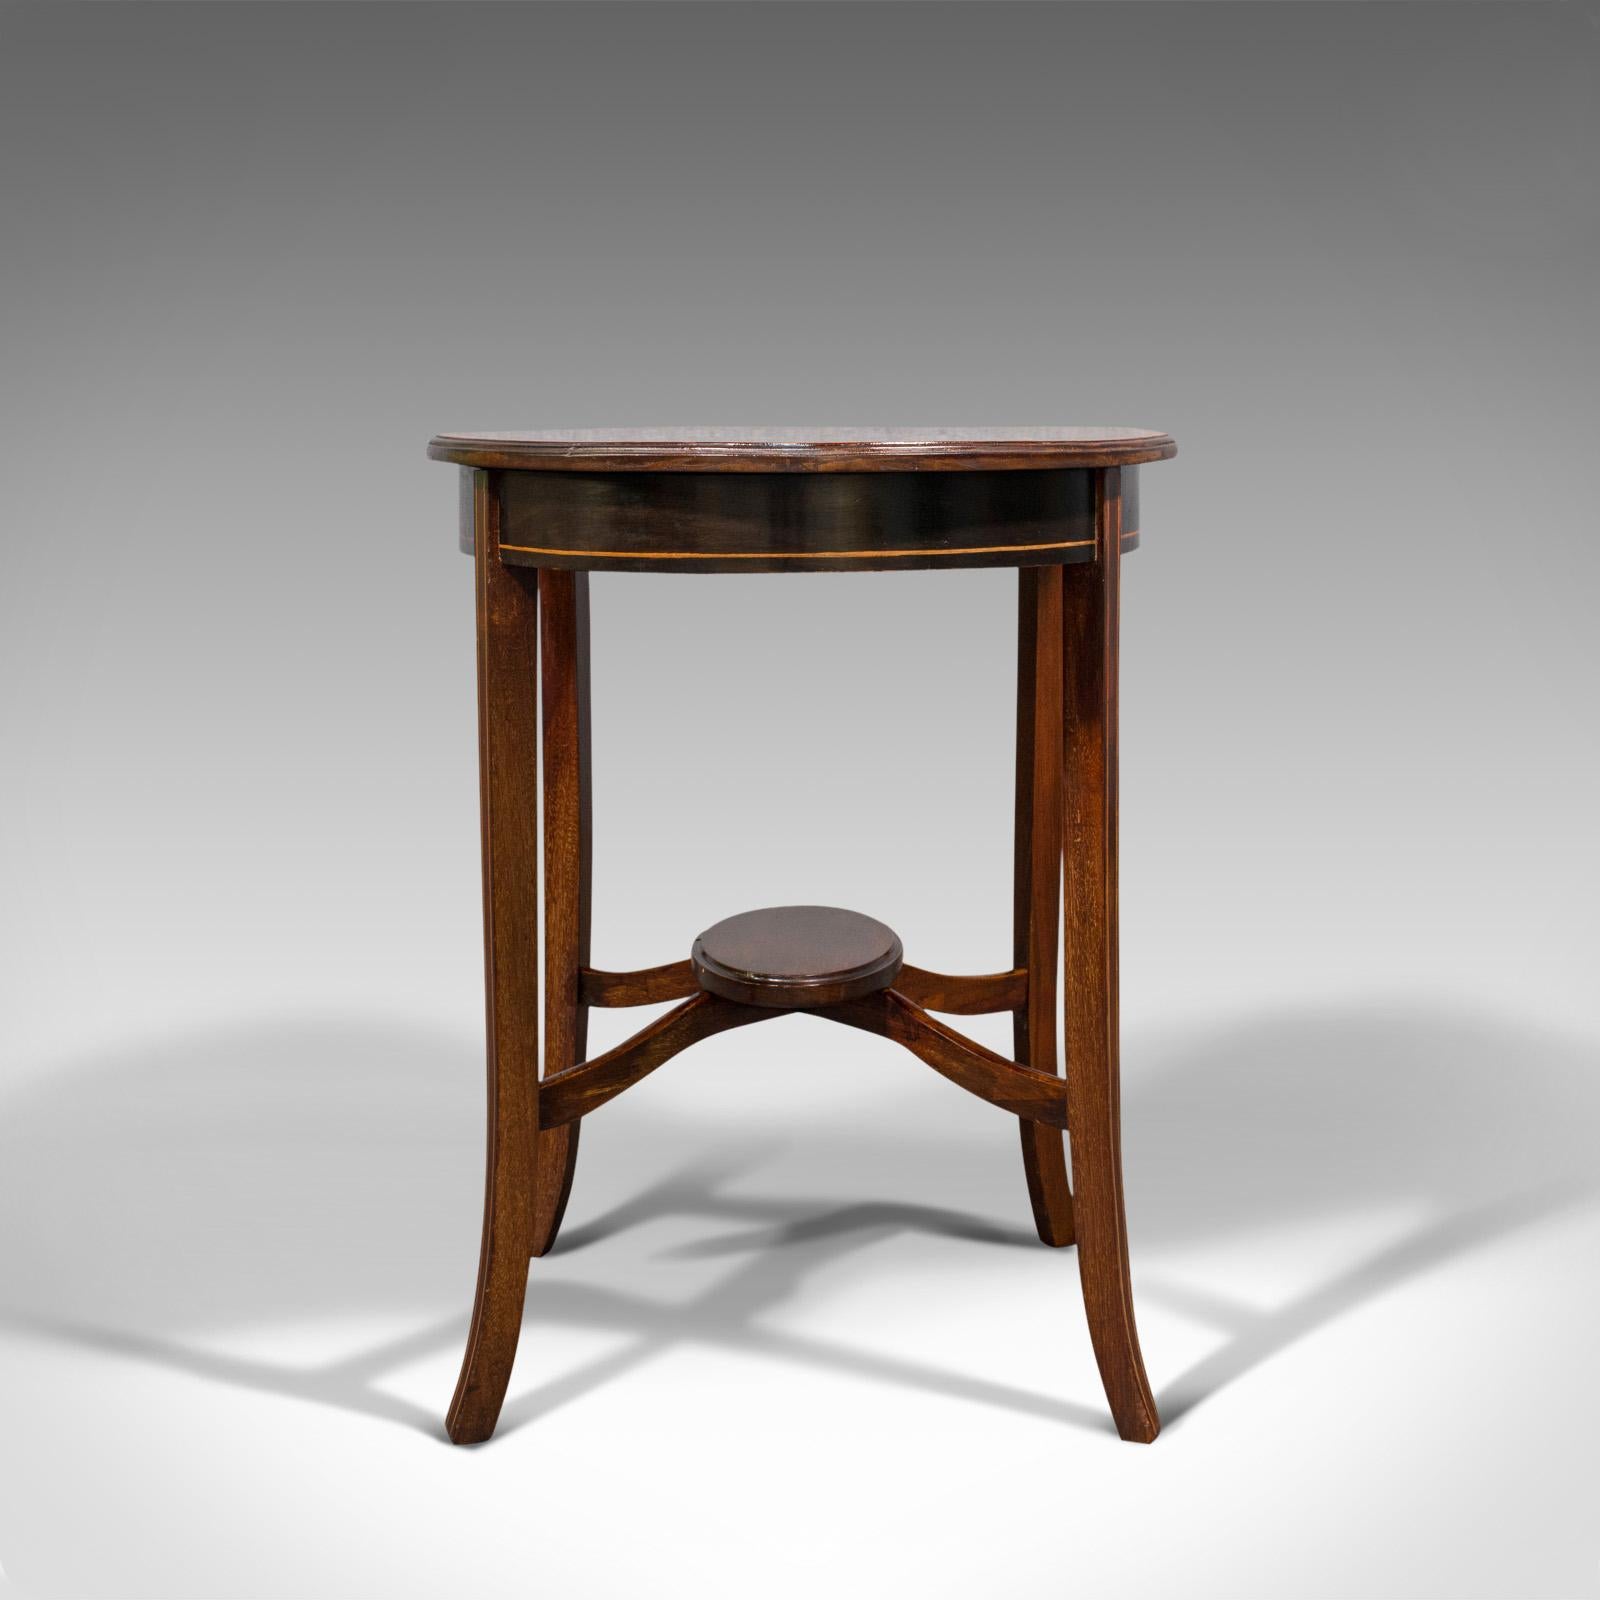 British Antique Side Table, English, Mahogany, Walnut, Lamp, Occasional, Regency, C.1820